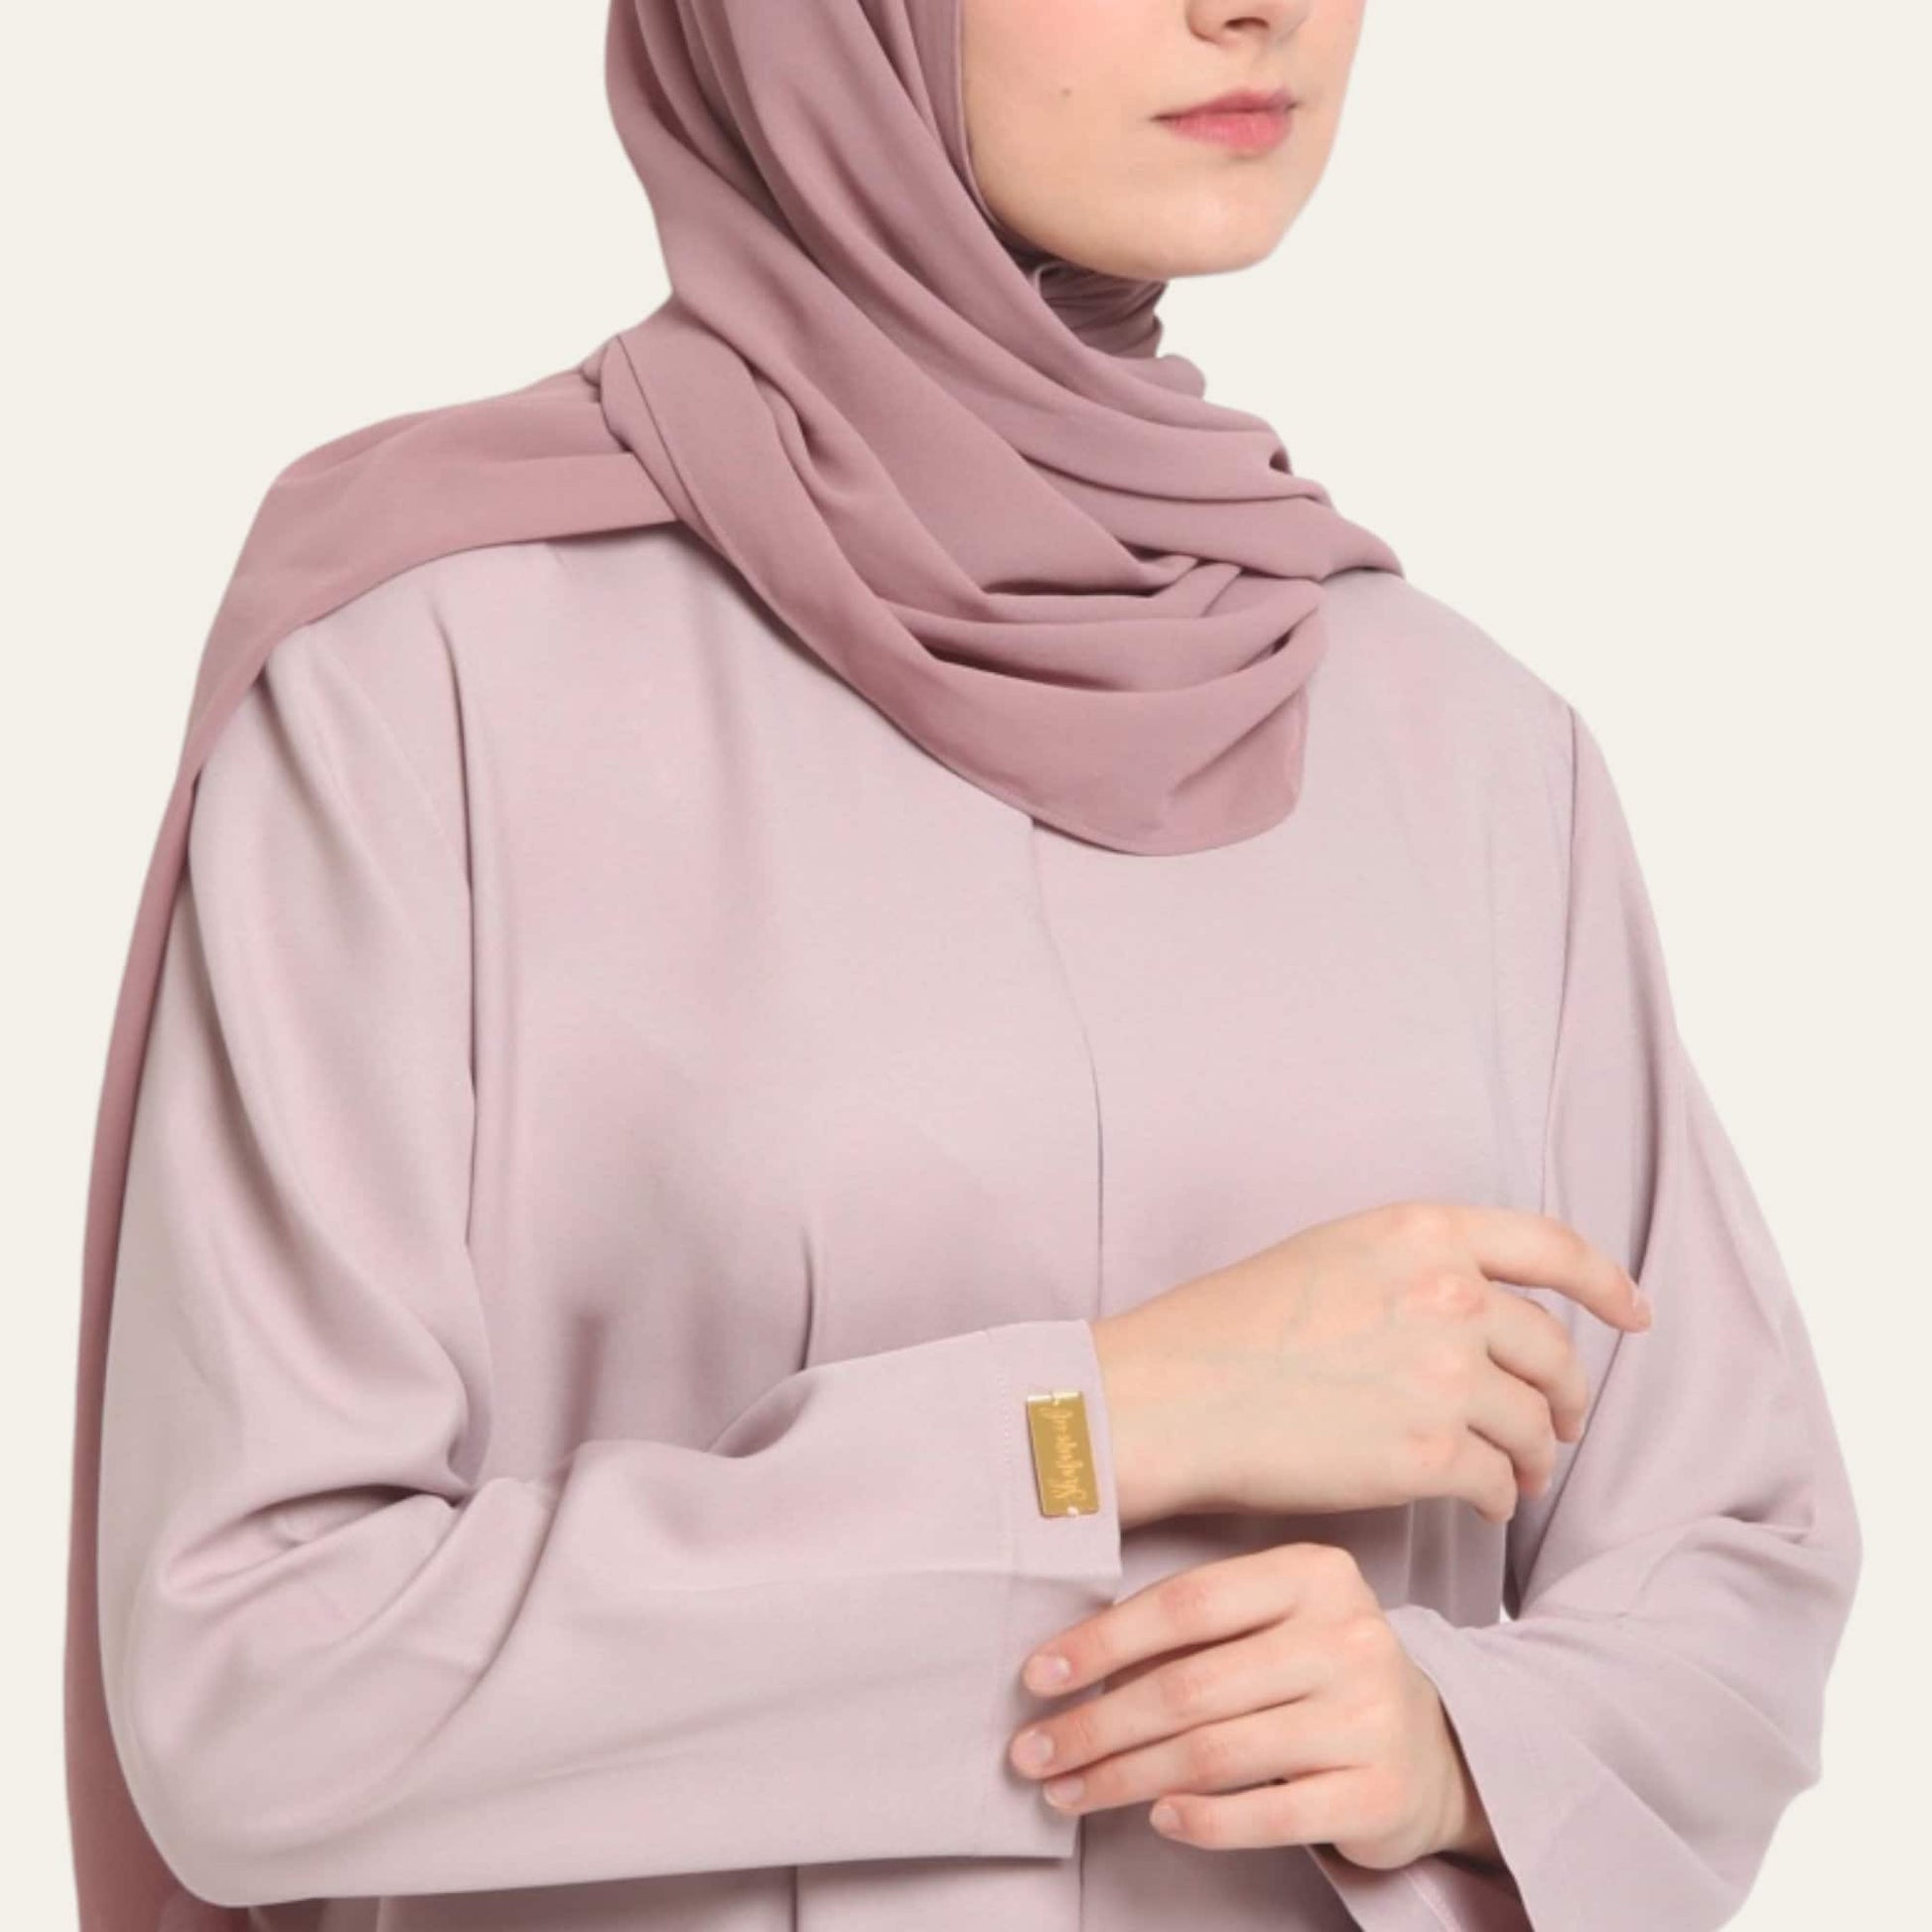 Pink Simple Modest Abaya Women for Hajj and Umrah | Zhaviah